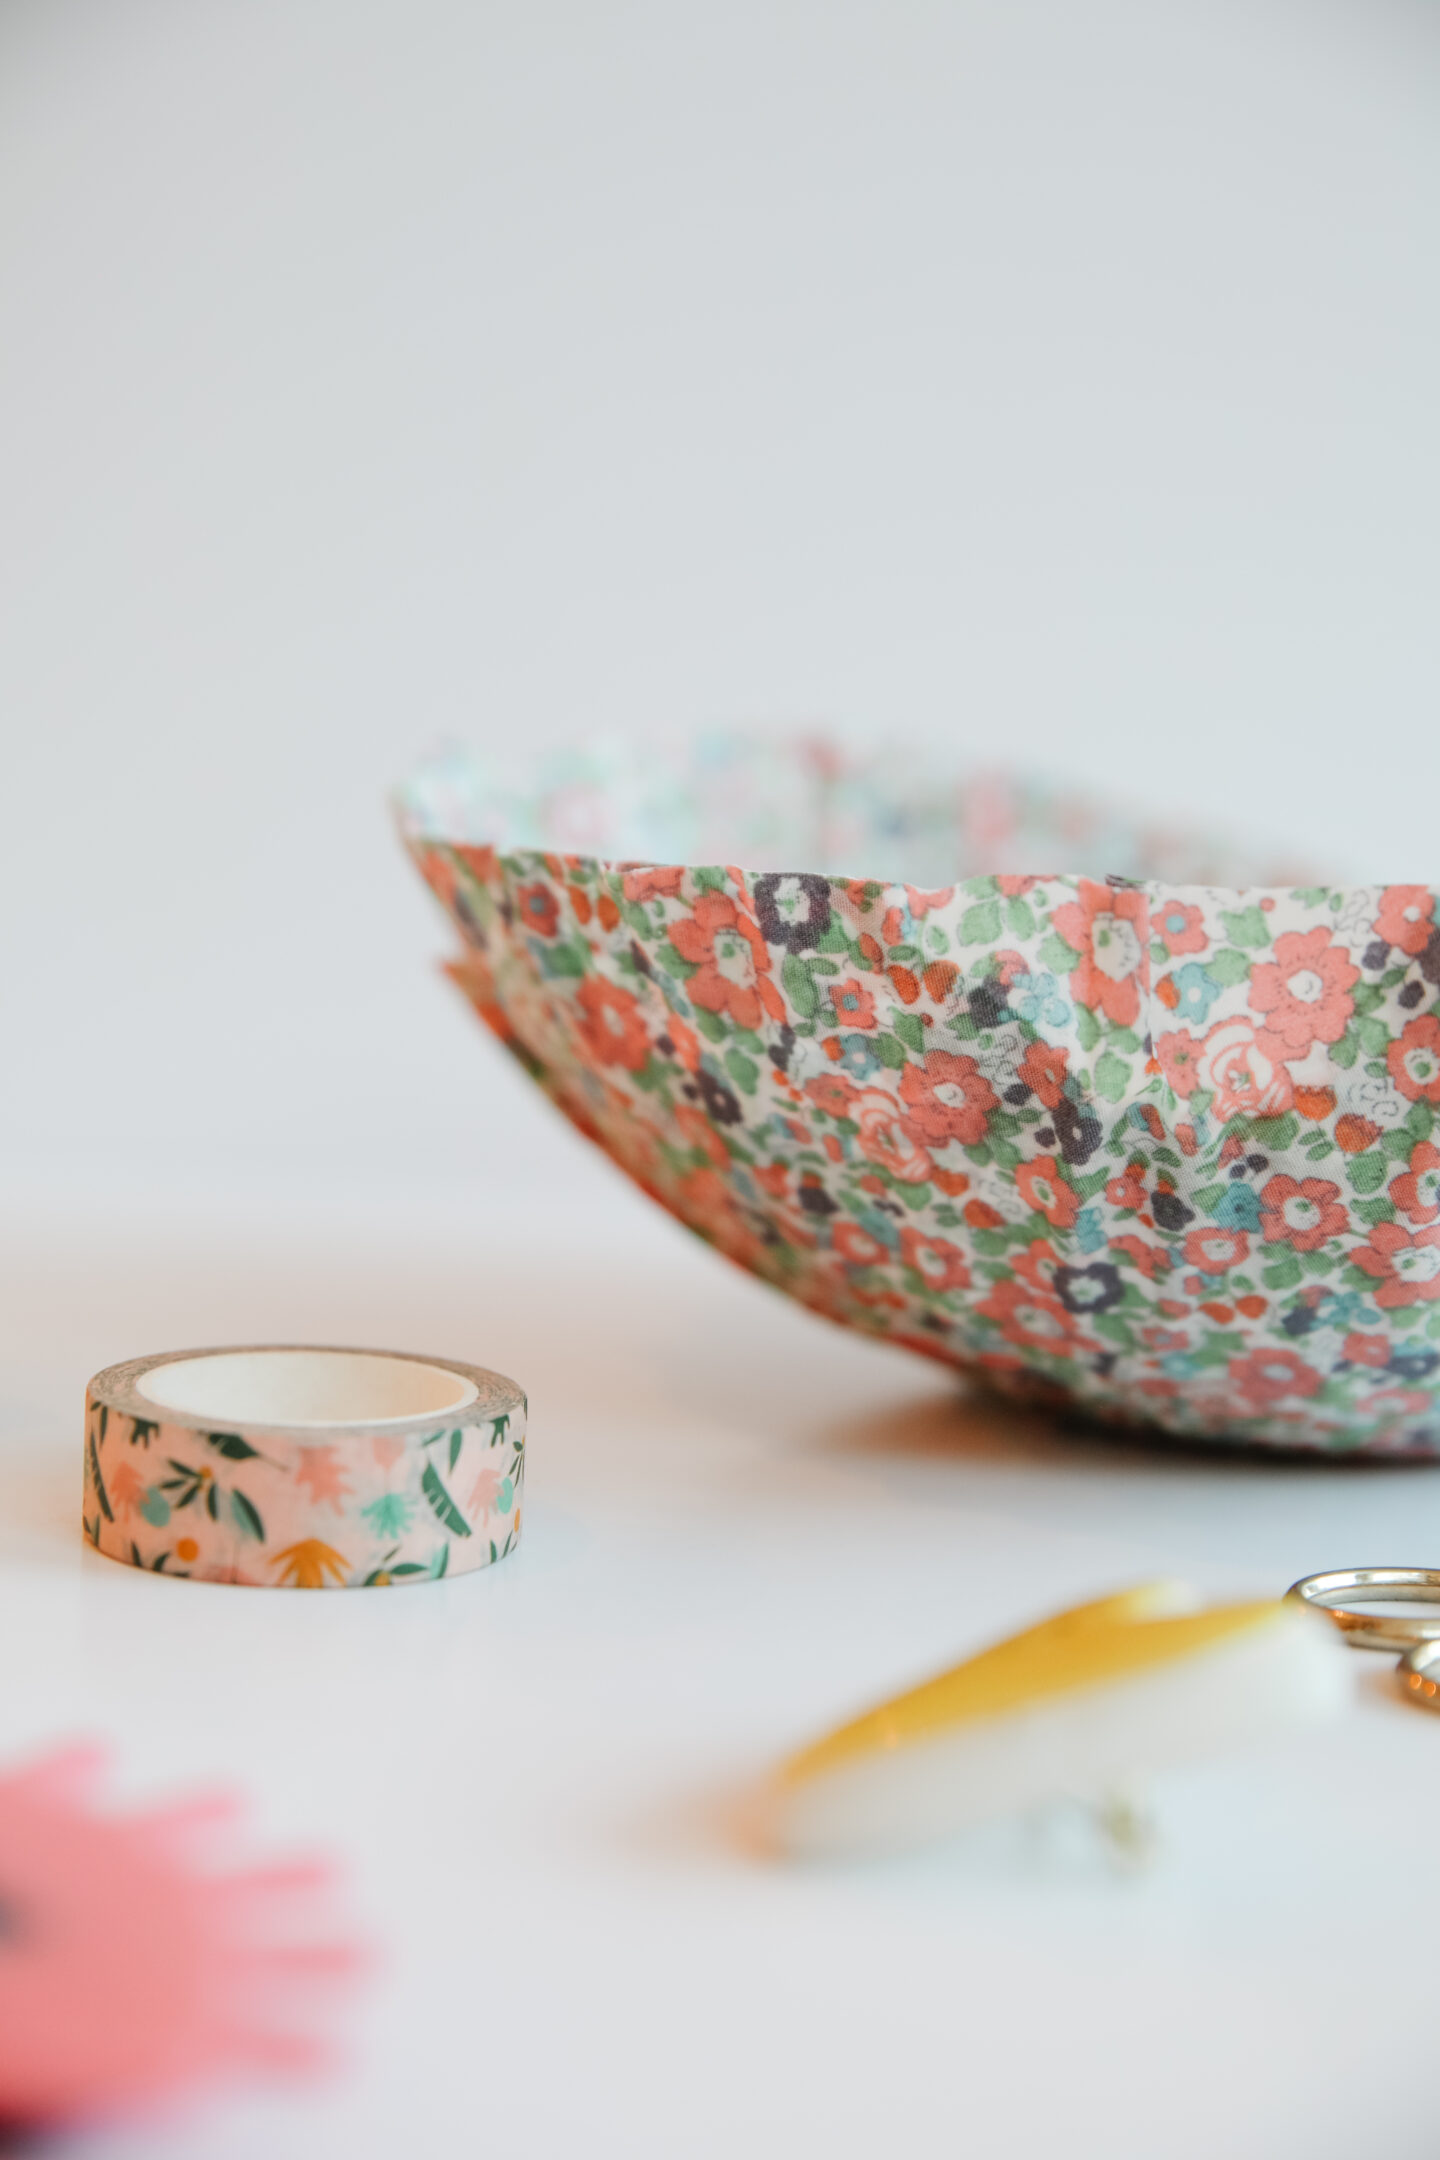 DIY fabric bowls using papier mache